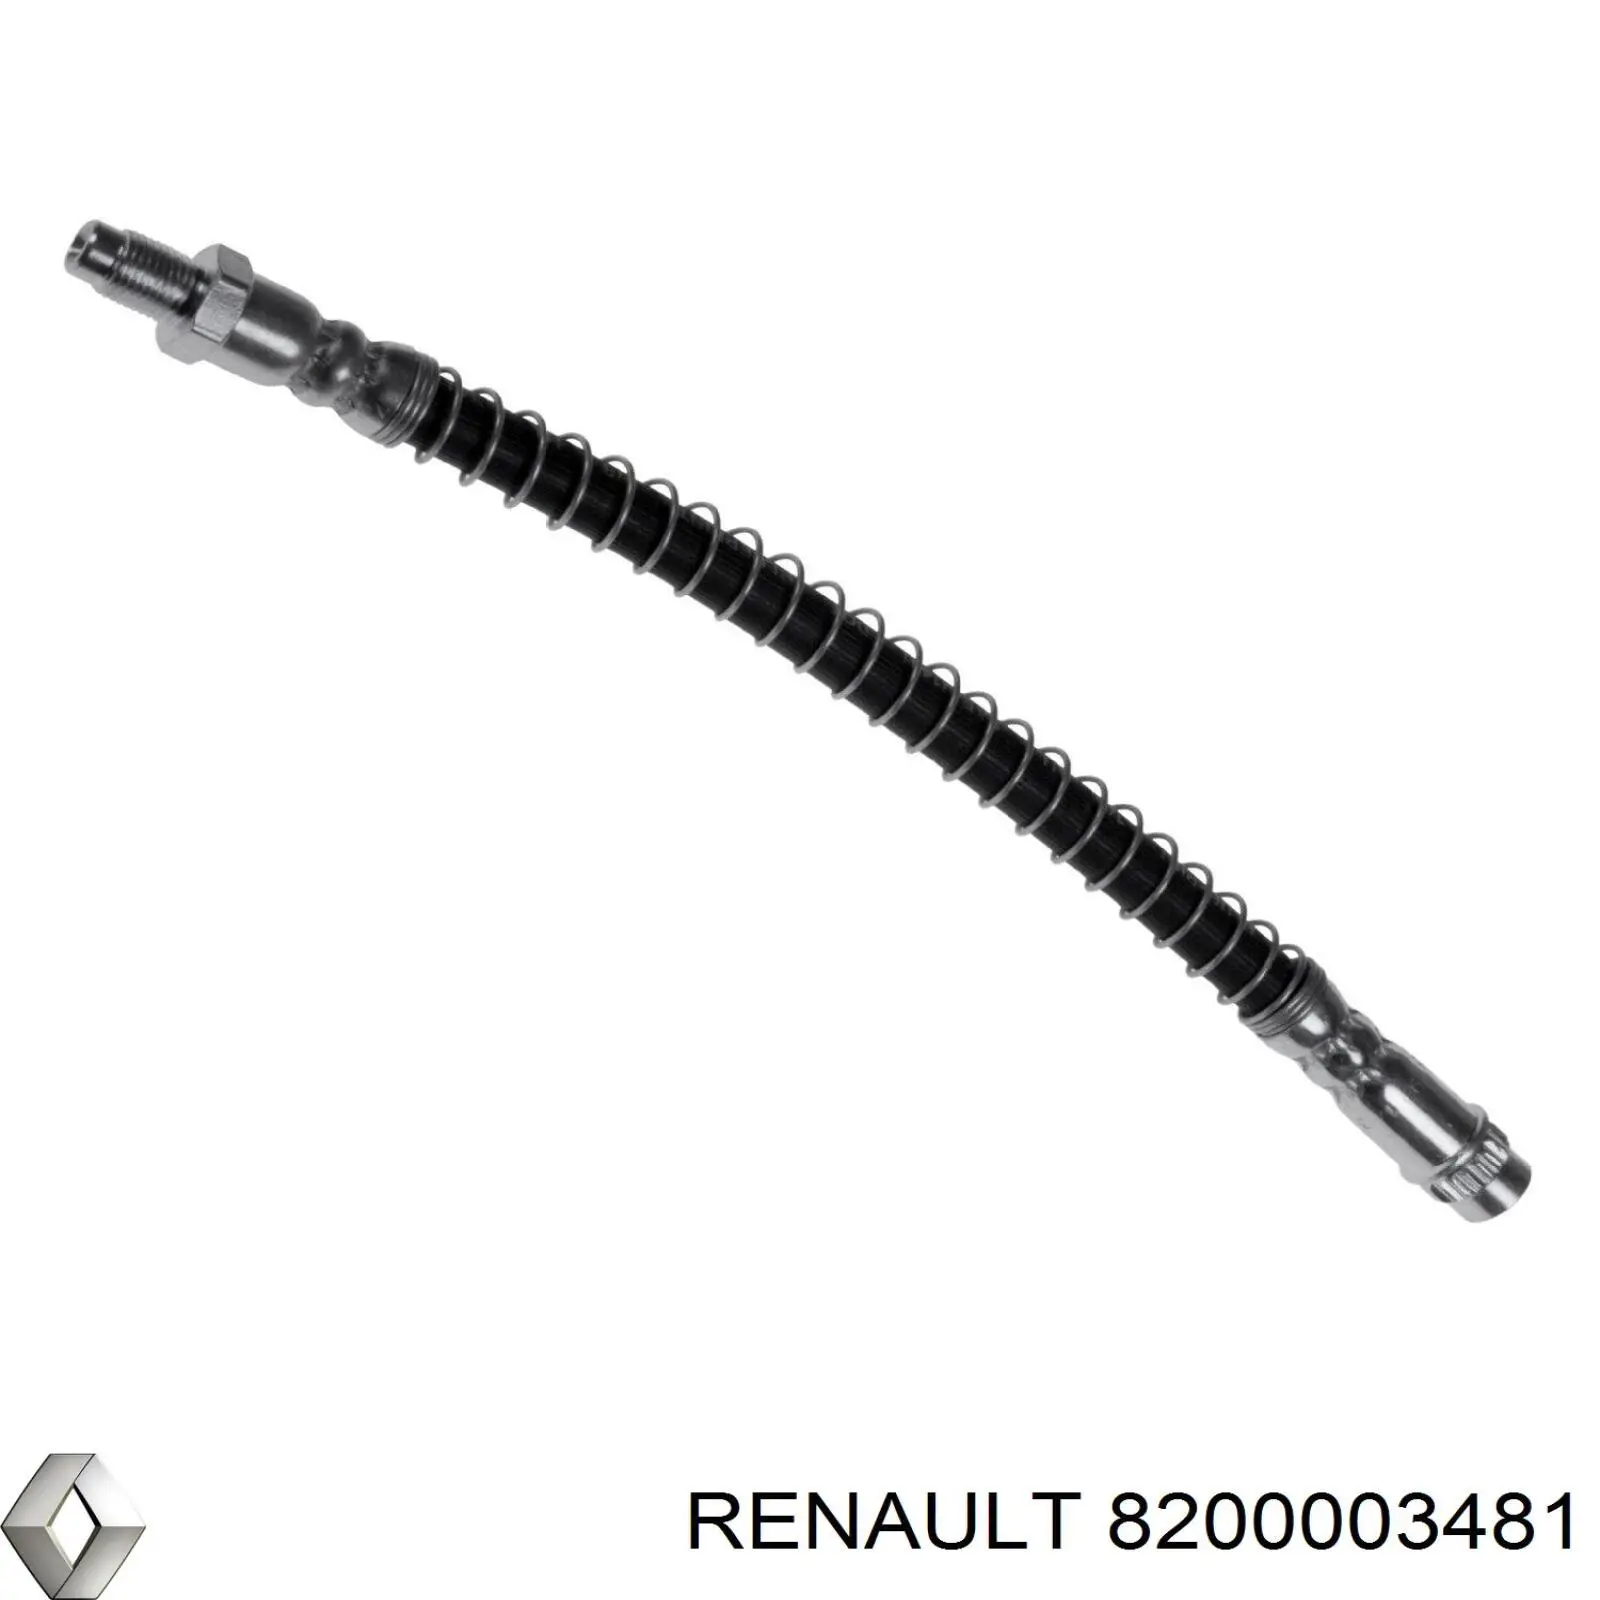 8200003481 Renault (RVI) latiguillo de freno trasero